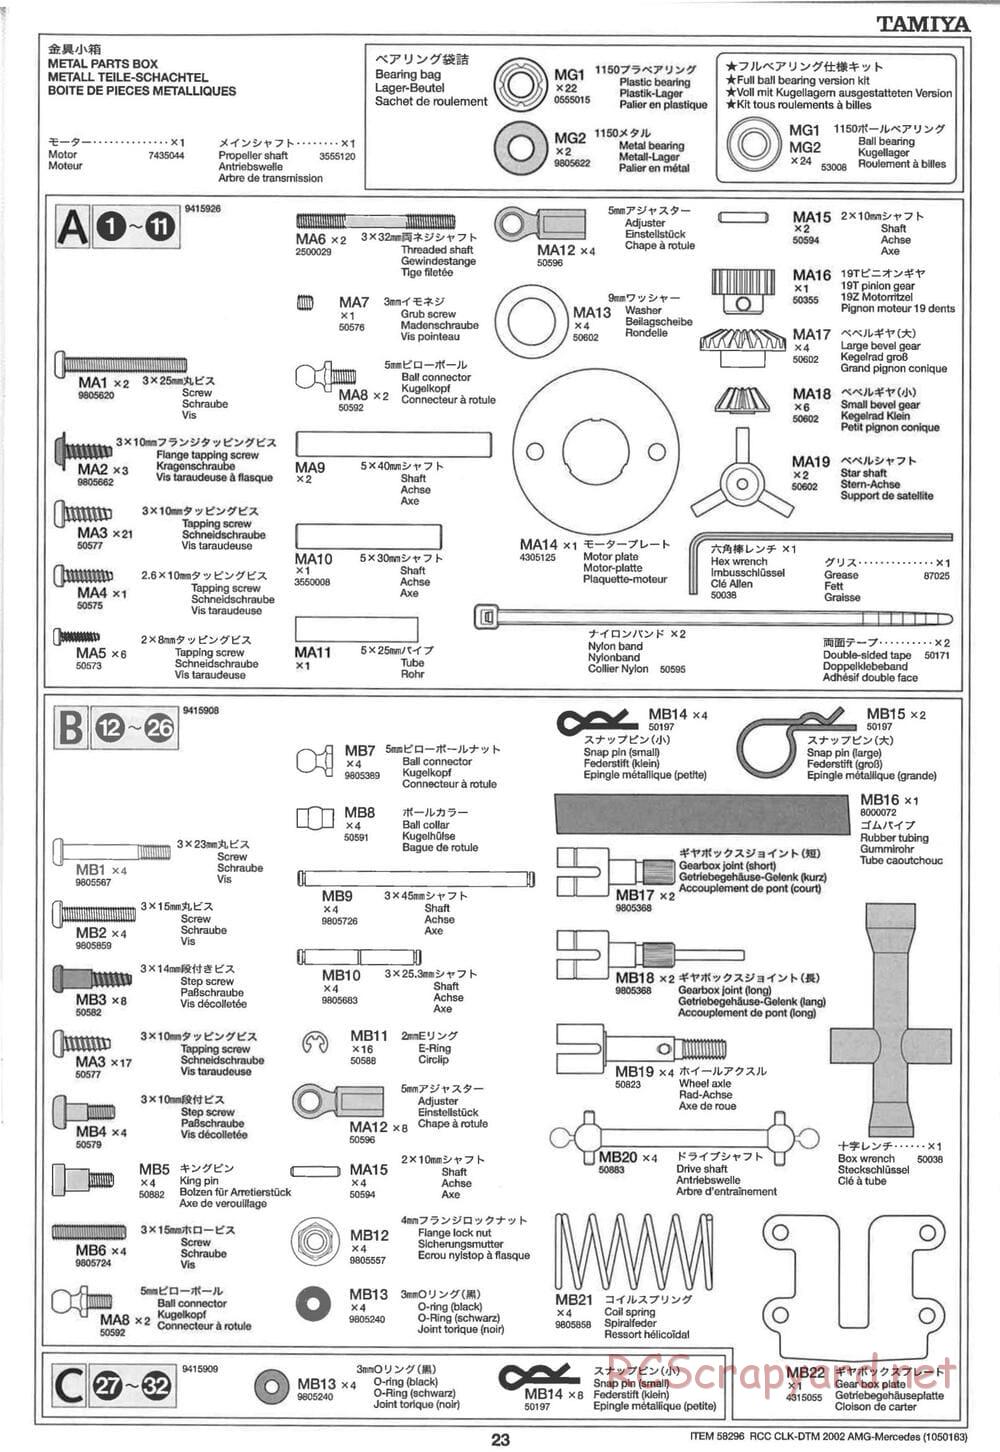 Tamiya - CLK DTM 2002 AMG Mercedes - TL-01 LA Chassis - Manual - Page 23